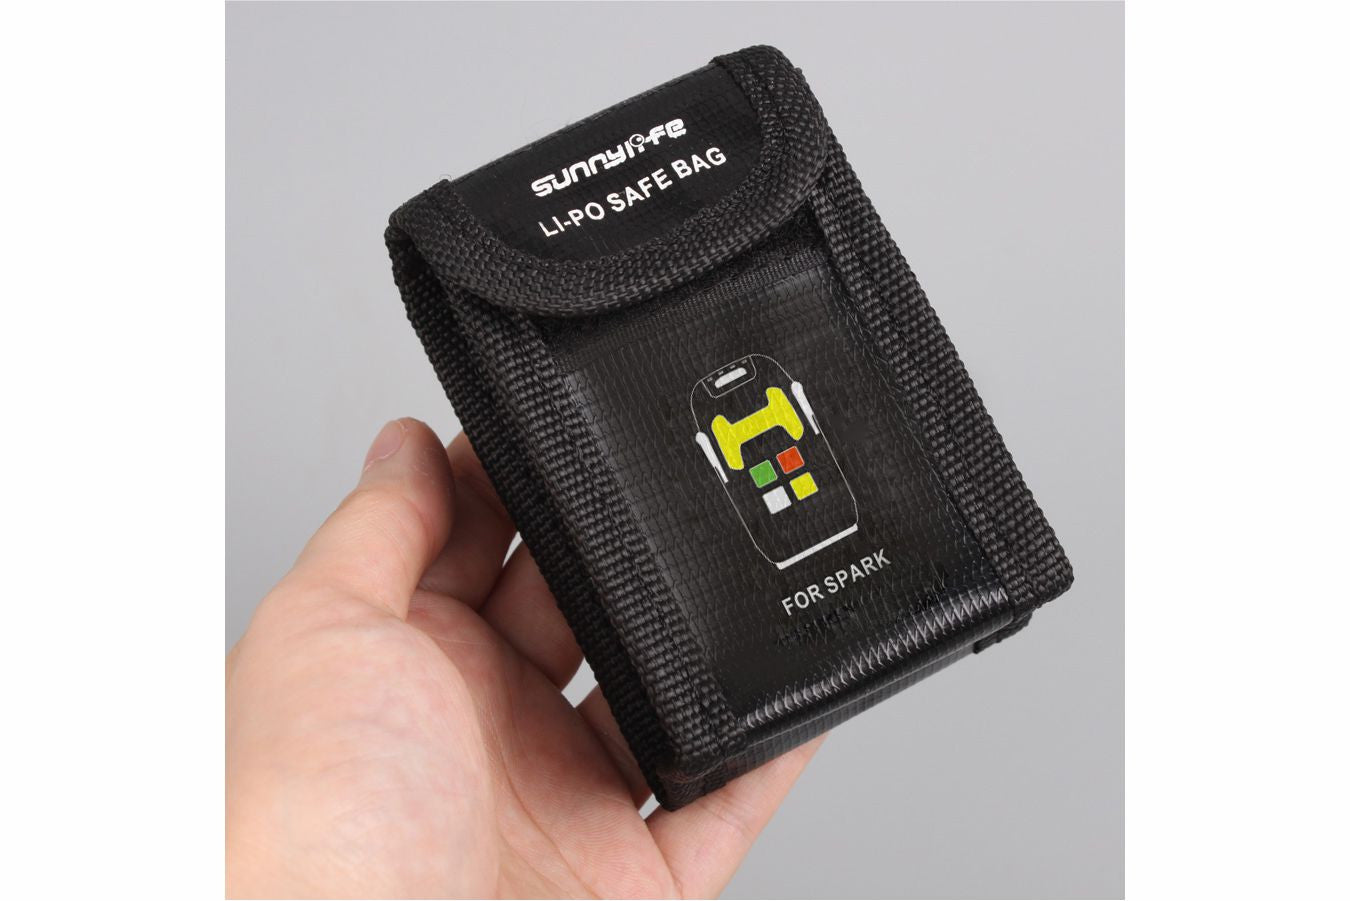 Sunnylife LiPo Safe Bag for DJI Spark Battery - DroneLabs.ca